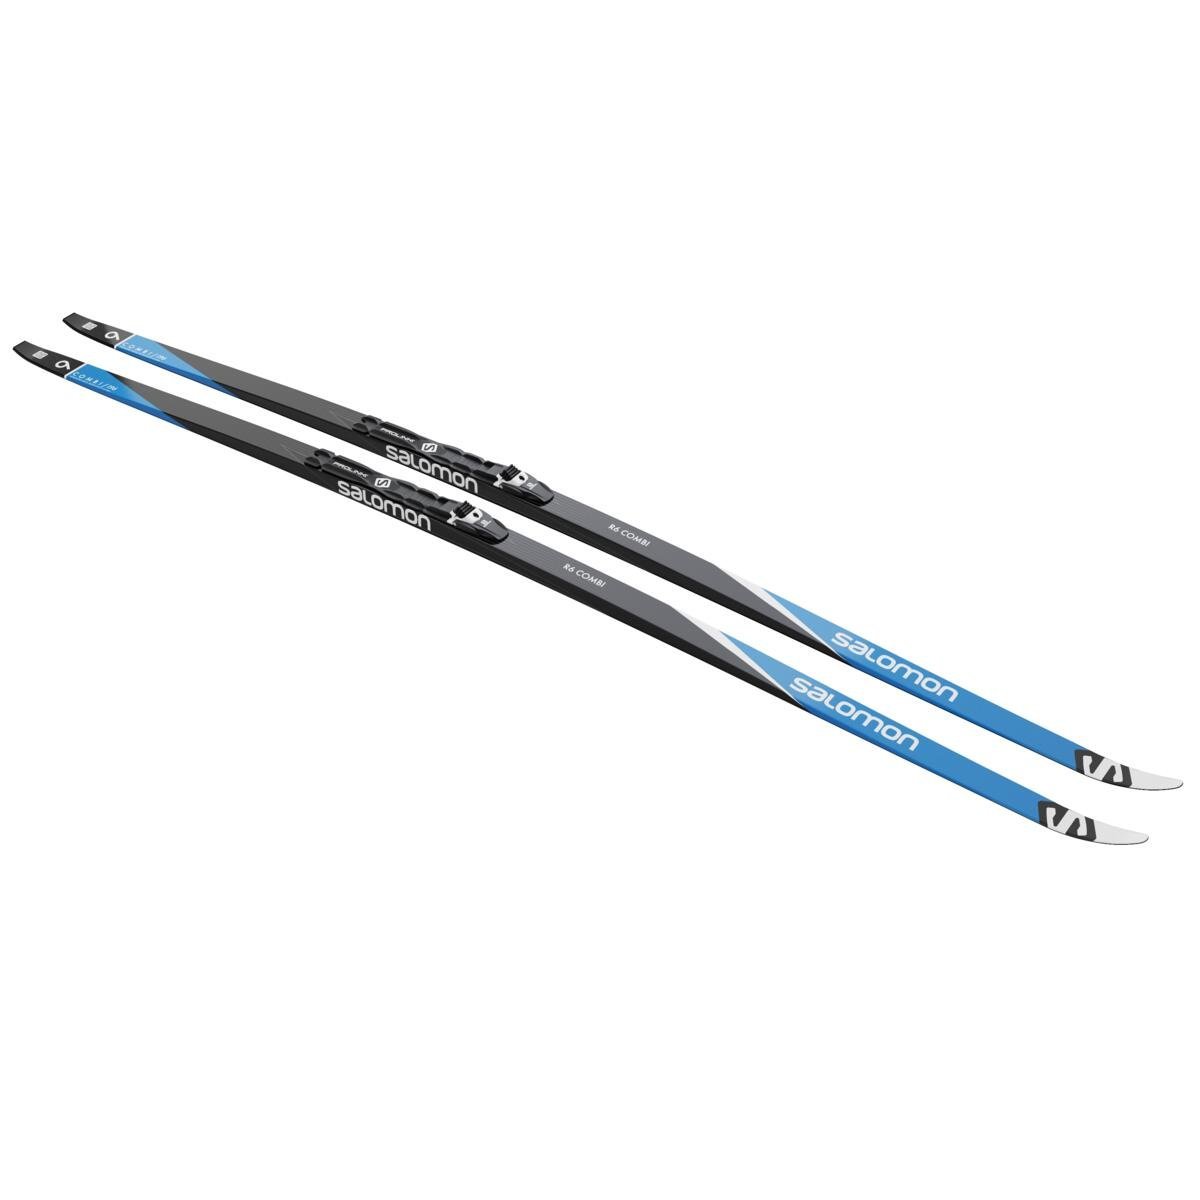 Bežecké lyže Salomon R6 COMBI + viazanie PROLINK PRO COMBI - čierna/modrá